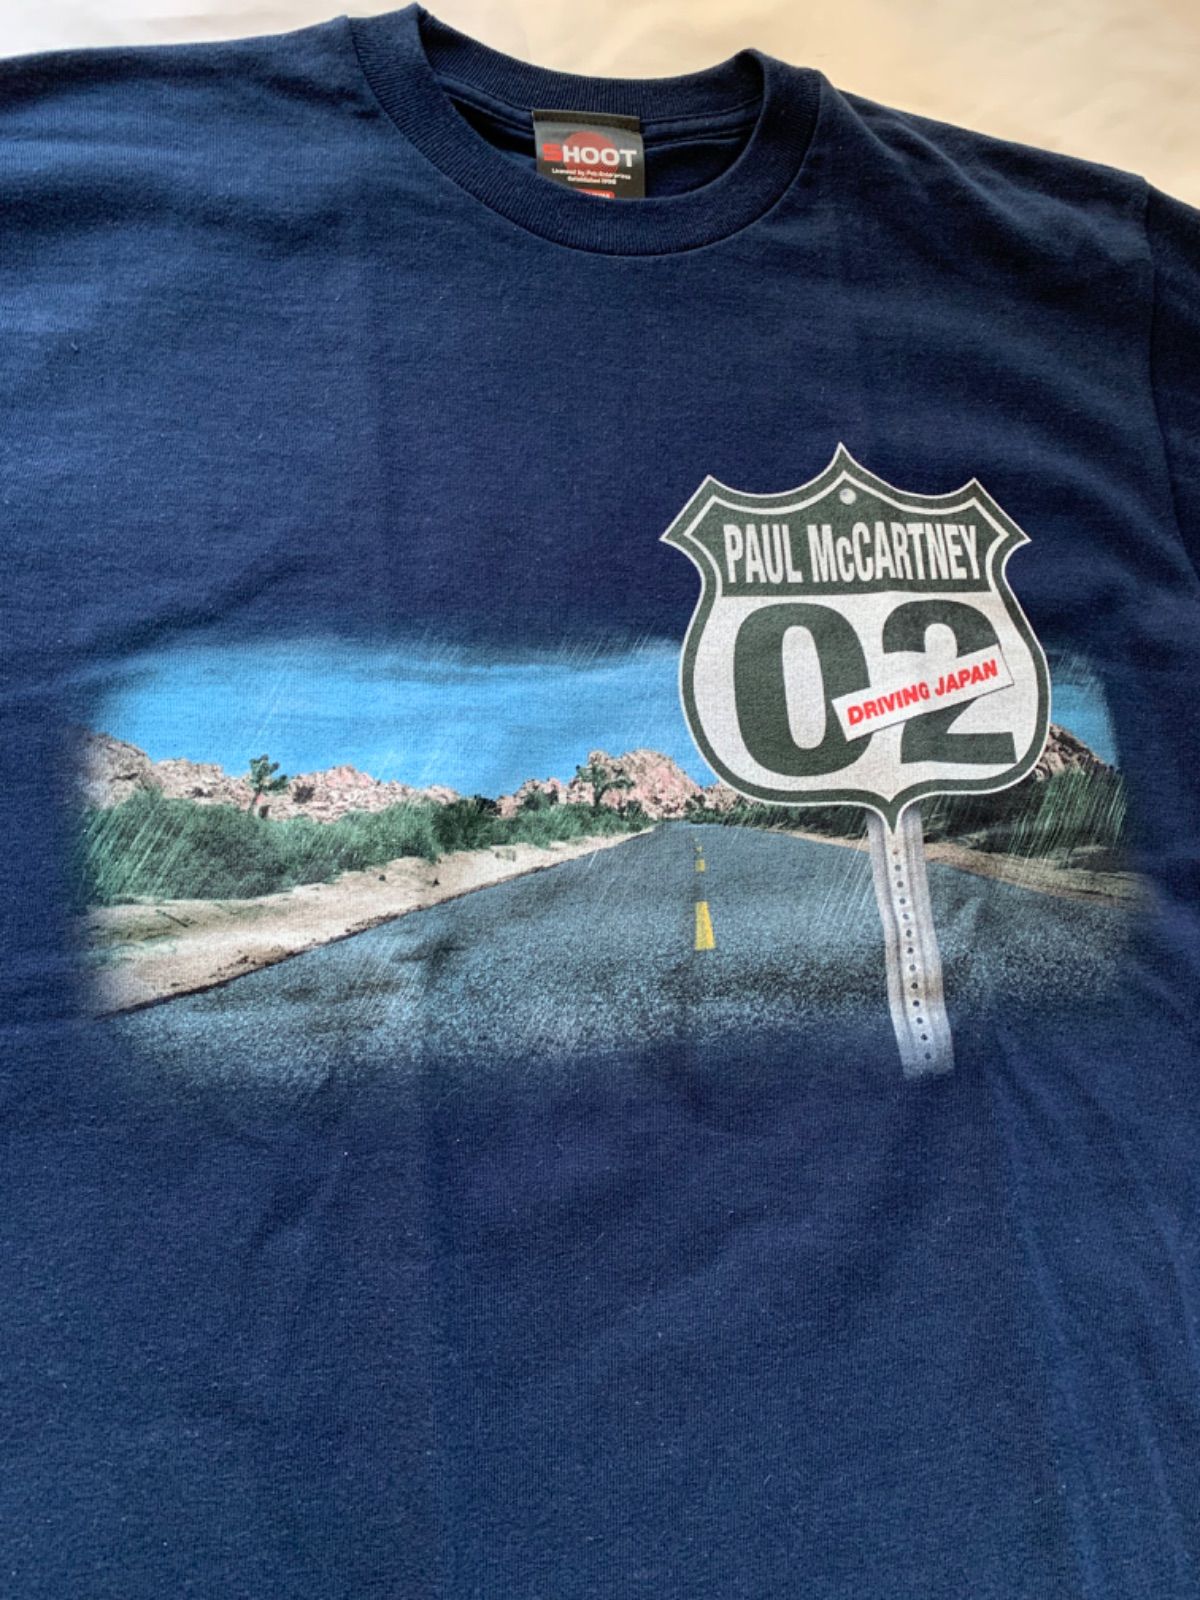 00s Paul McCartney “DRIVING JAPAN TOUR” S/S Graphic T-Shirt ポール